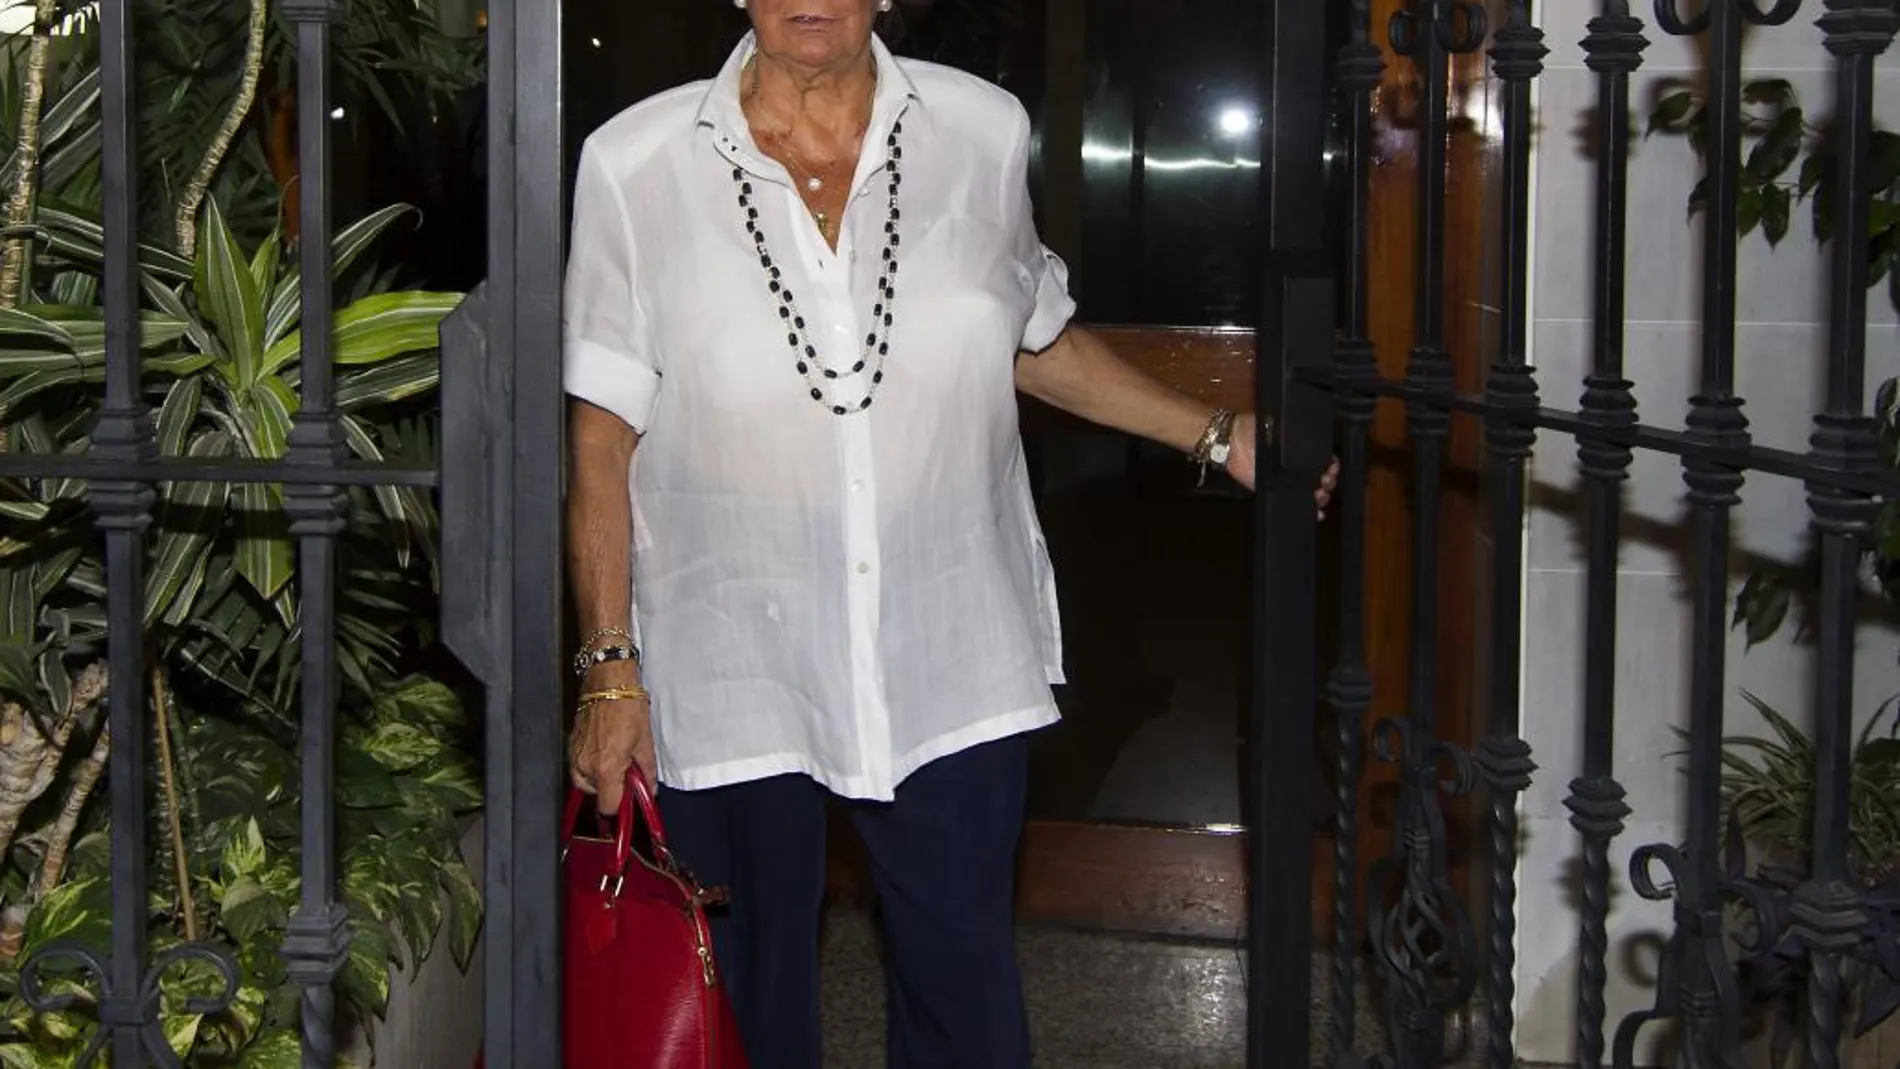 La ex alcaldesa de Valencia Rita Barberá